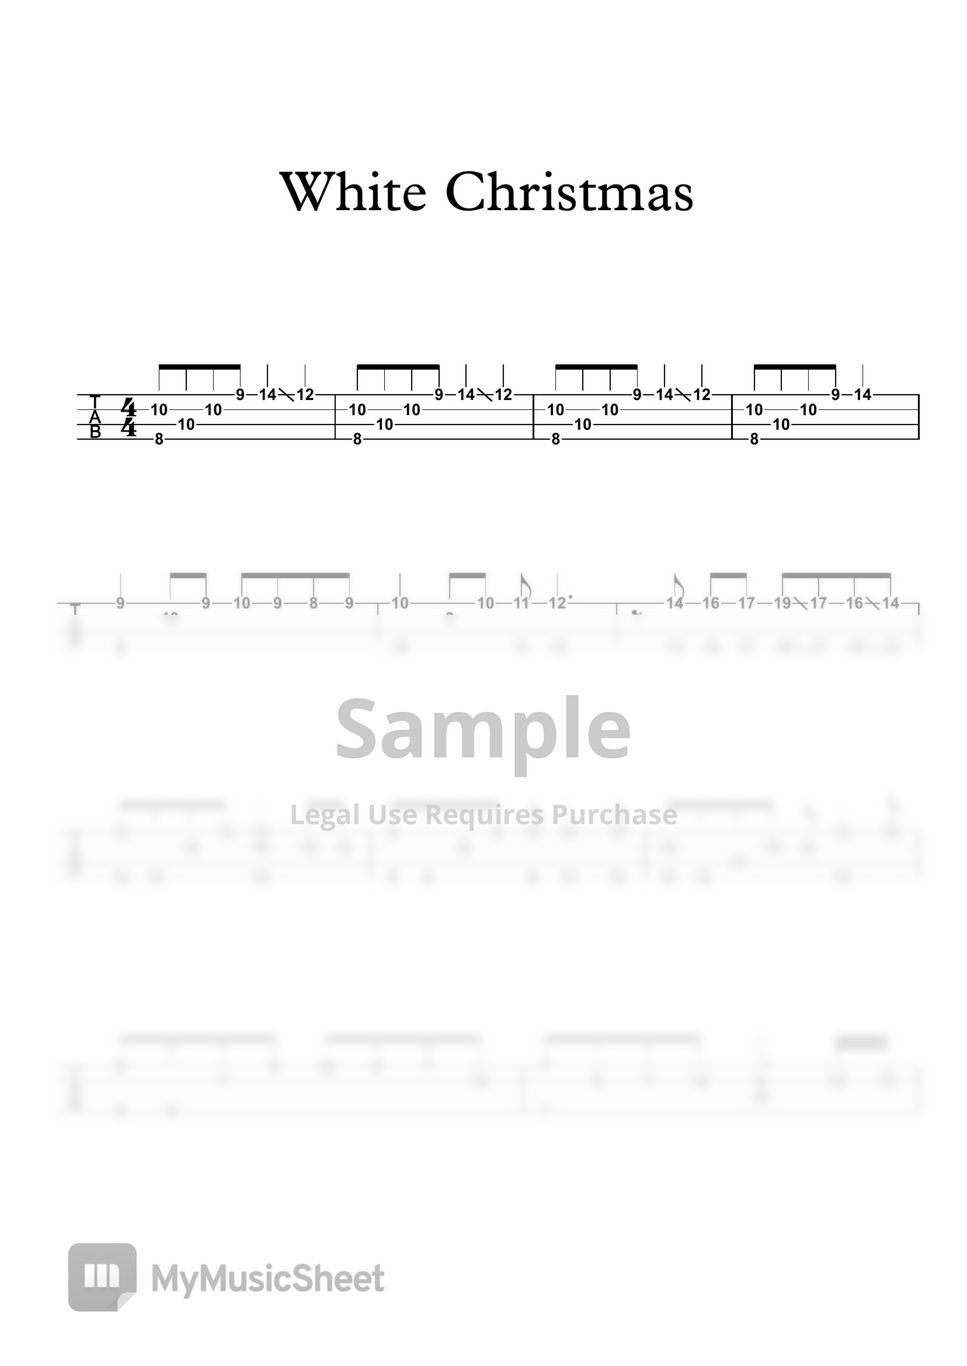 Irving Berlin - White Christmas Solo Bass by BassTabsWorld